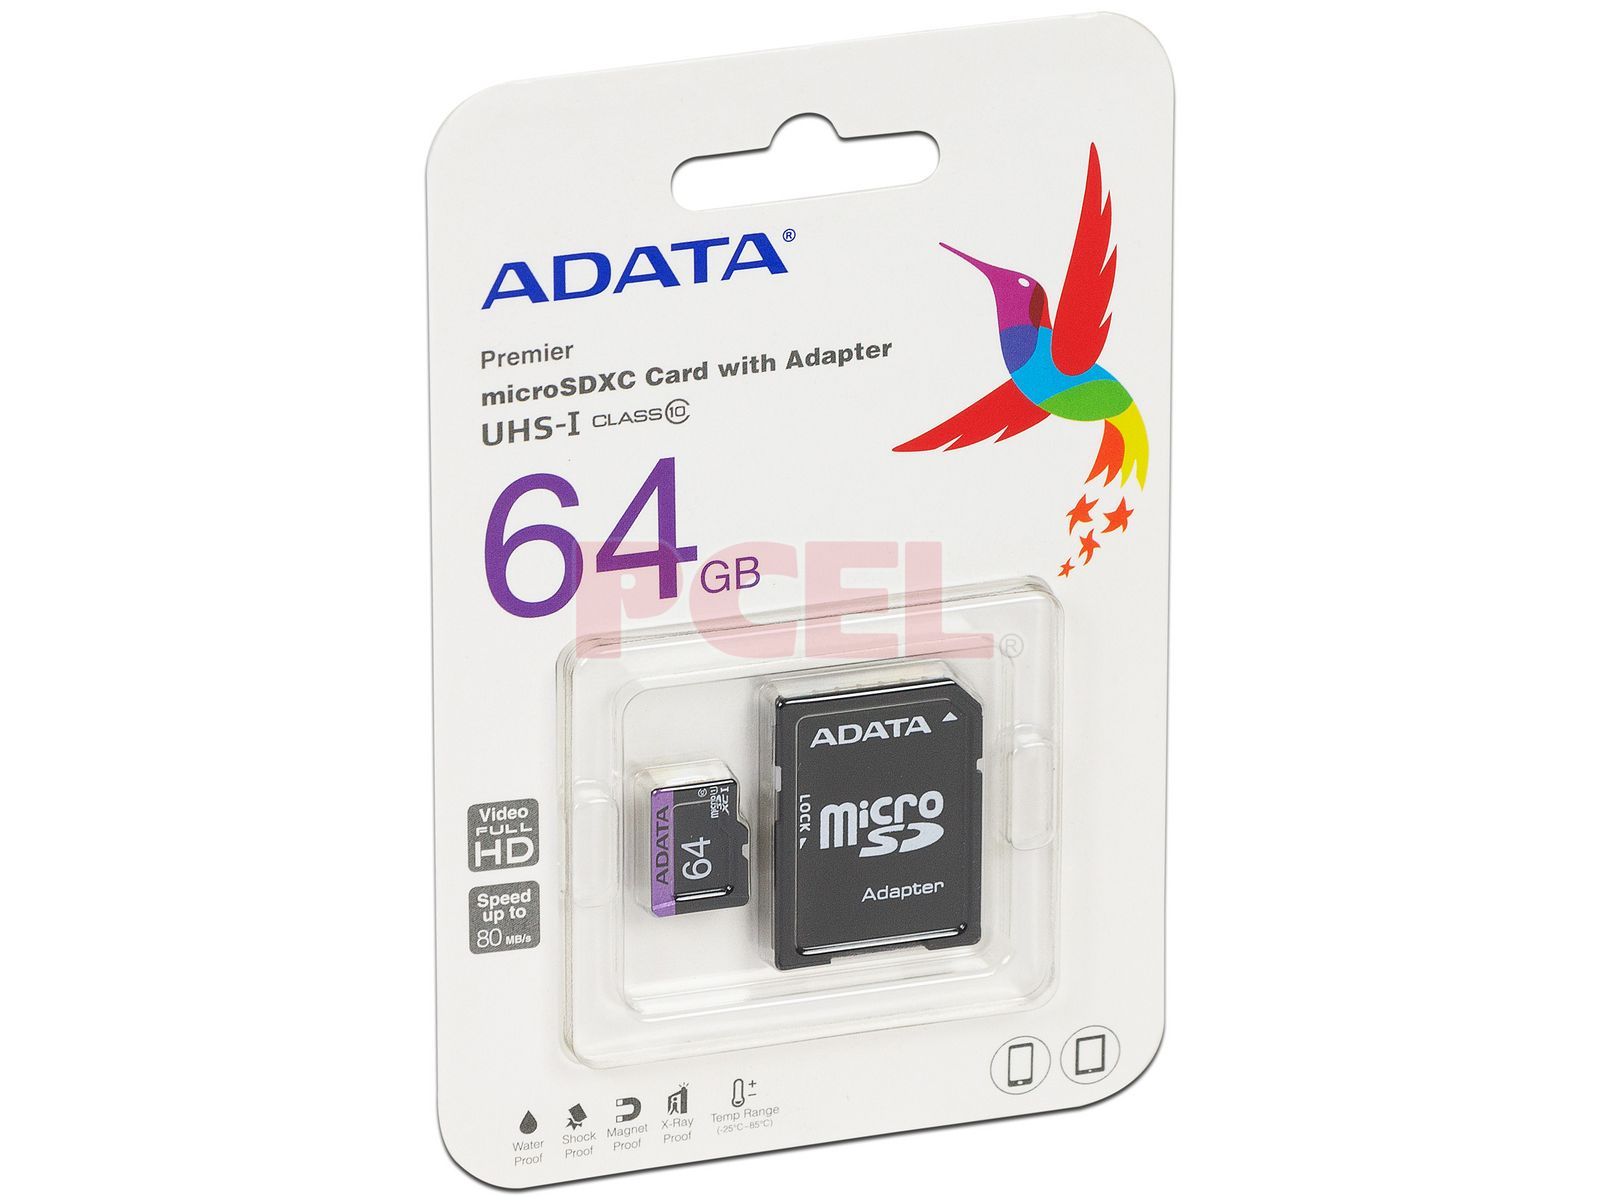 ADATA 64GB Premier microSDXC C10 UHS-I tarjeta de Memoria con Adaptador ausdx 64GU1CL10-RA1 